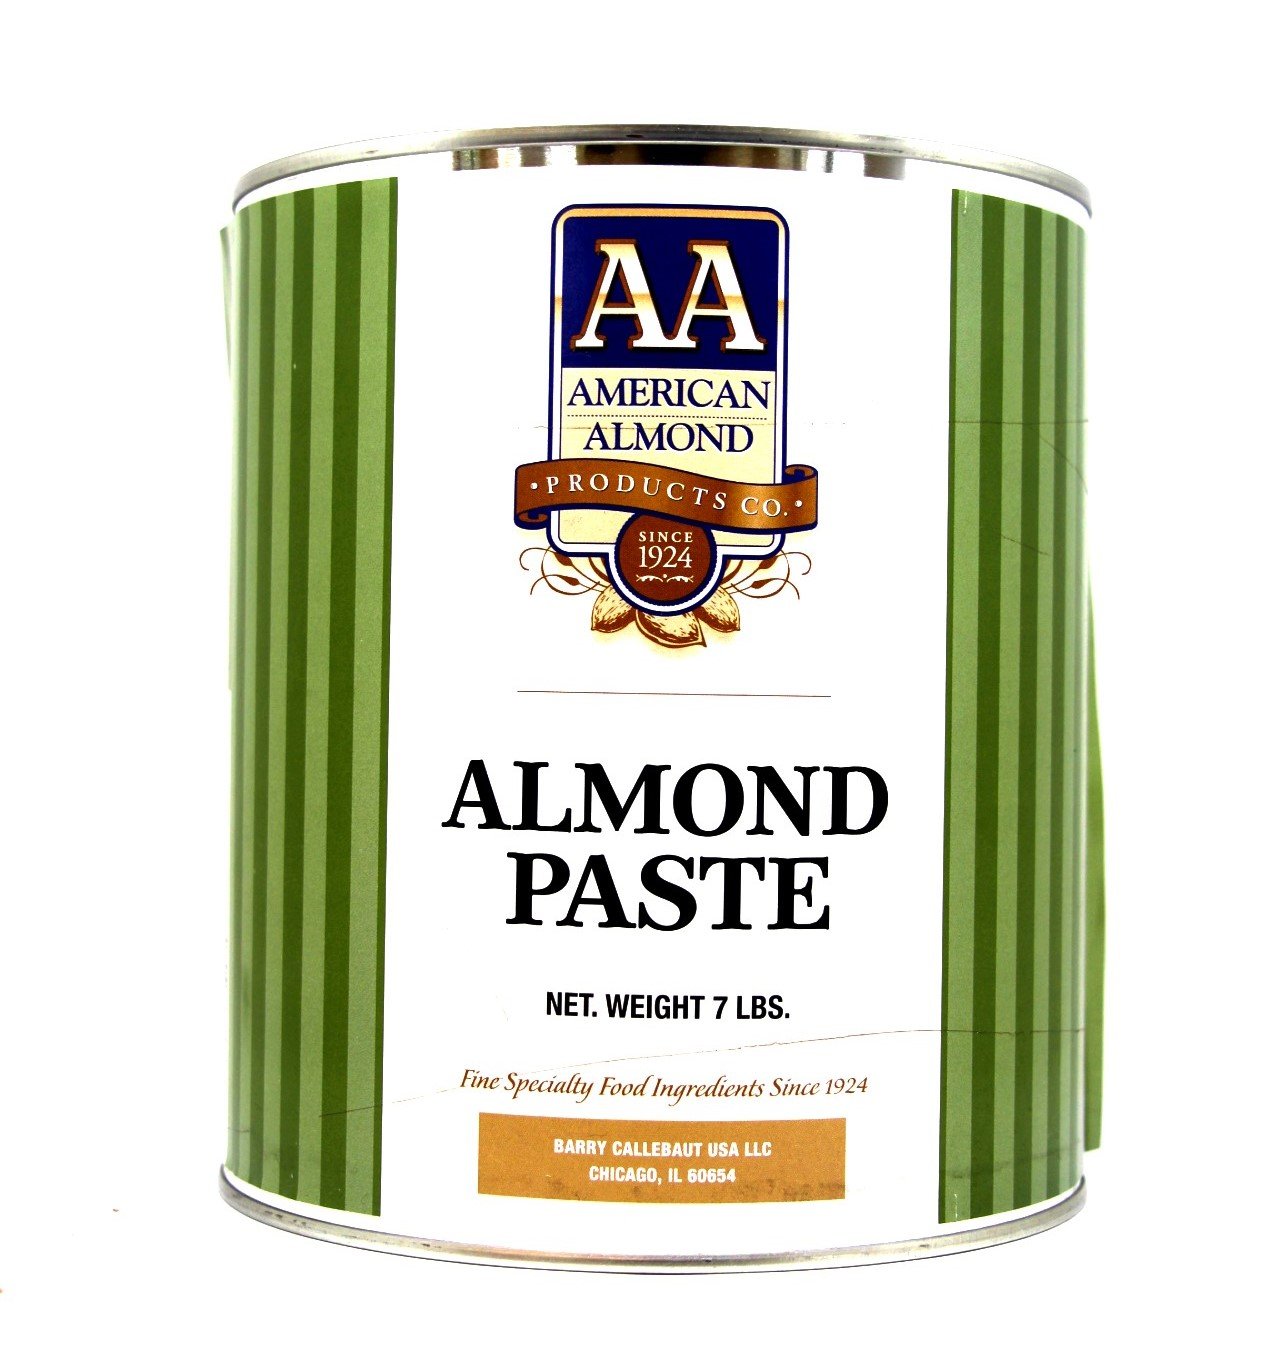 Almond Paste image zoom